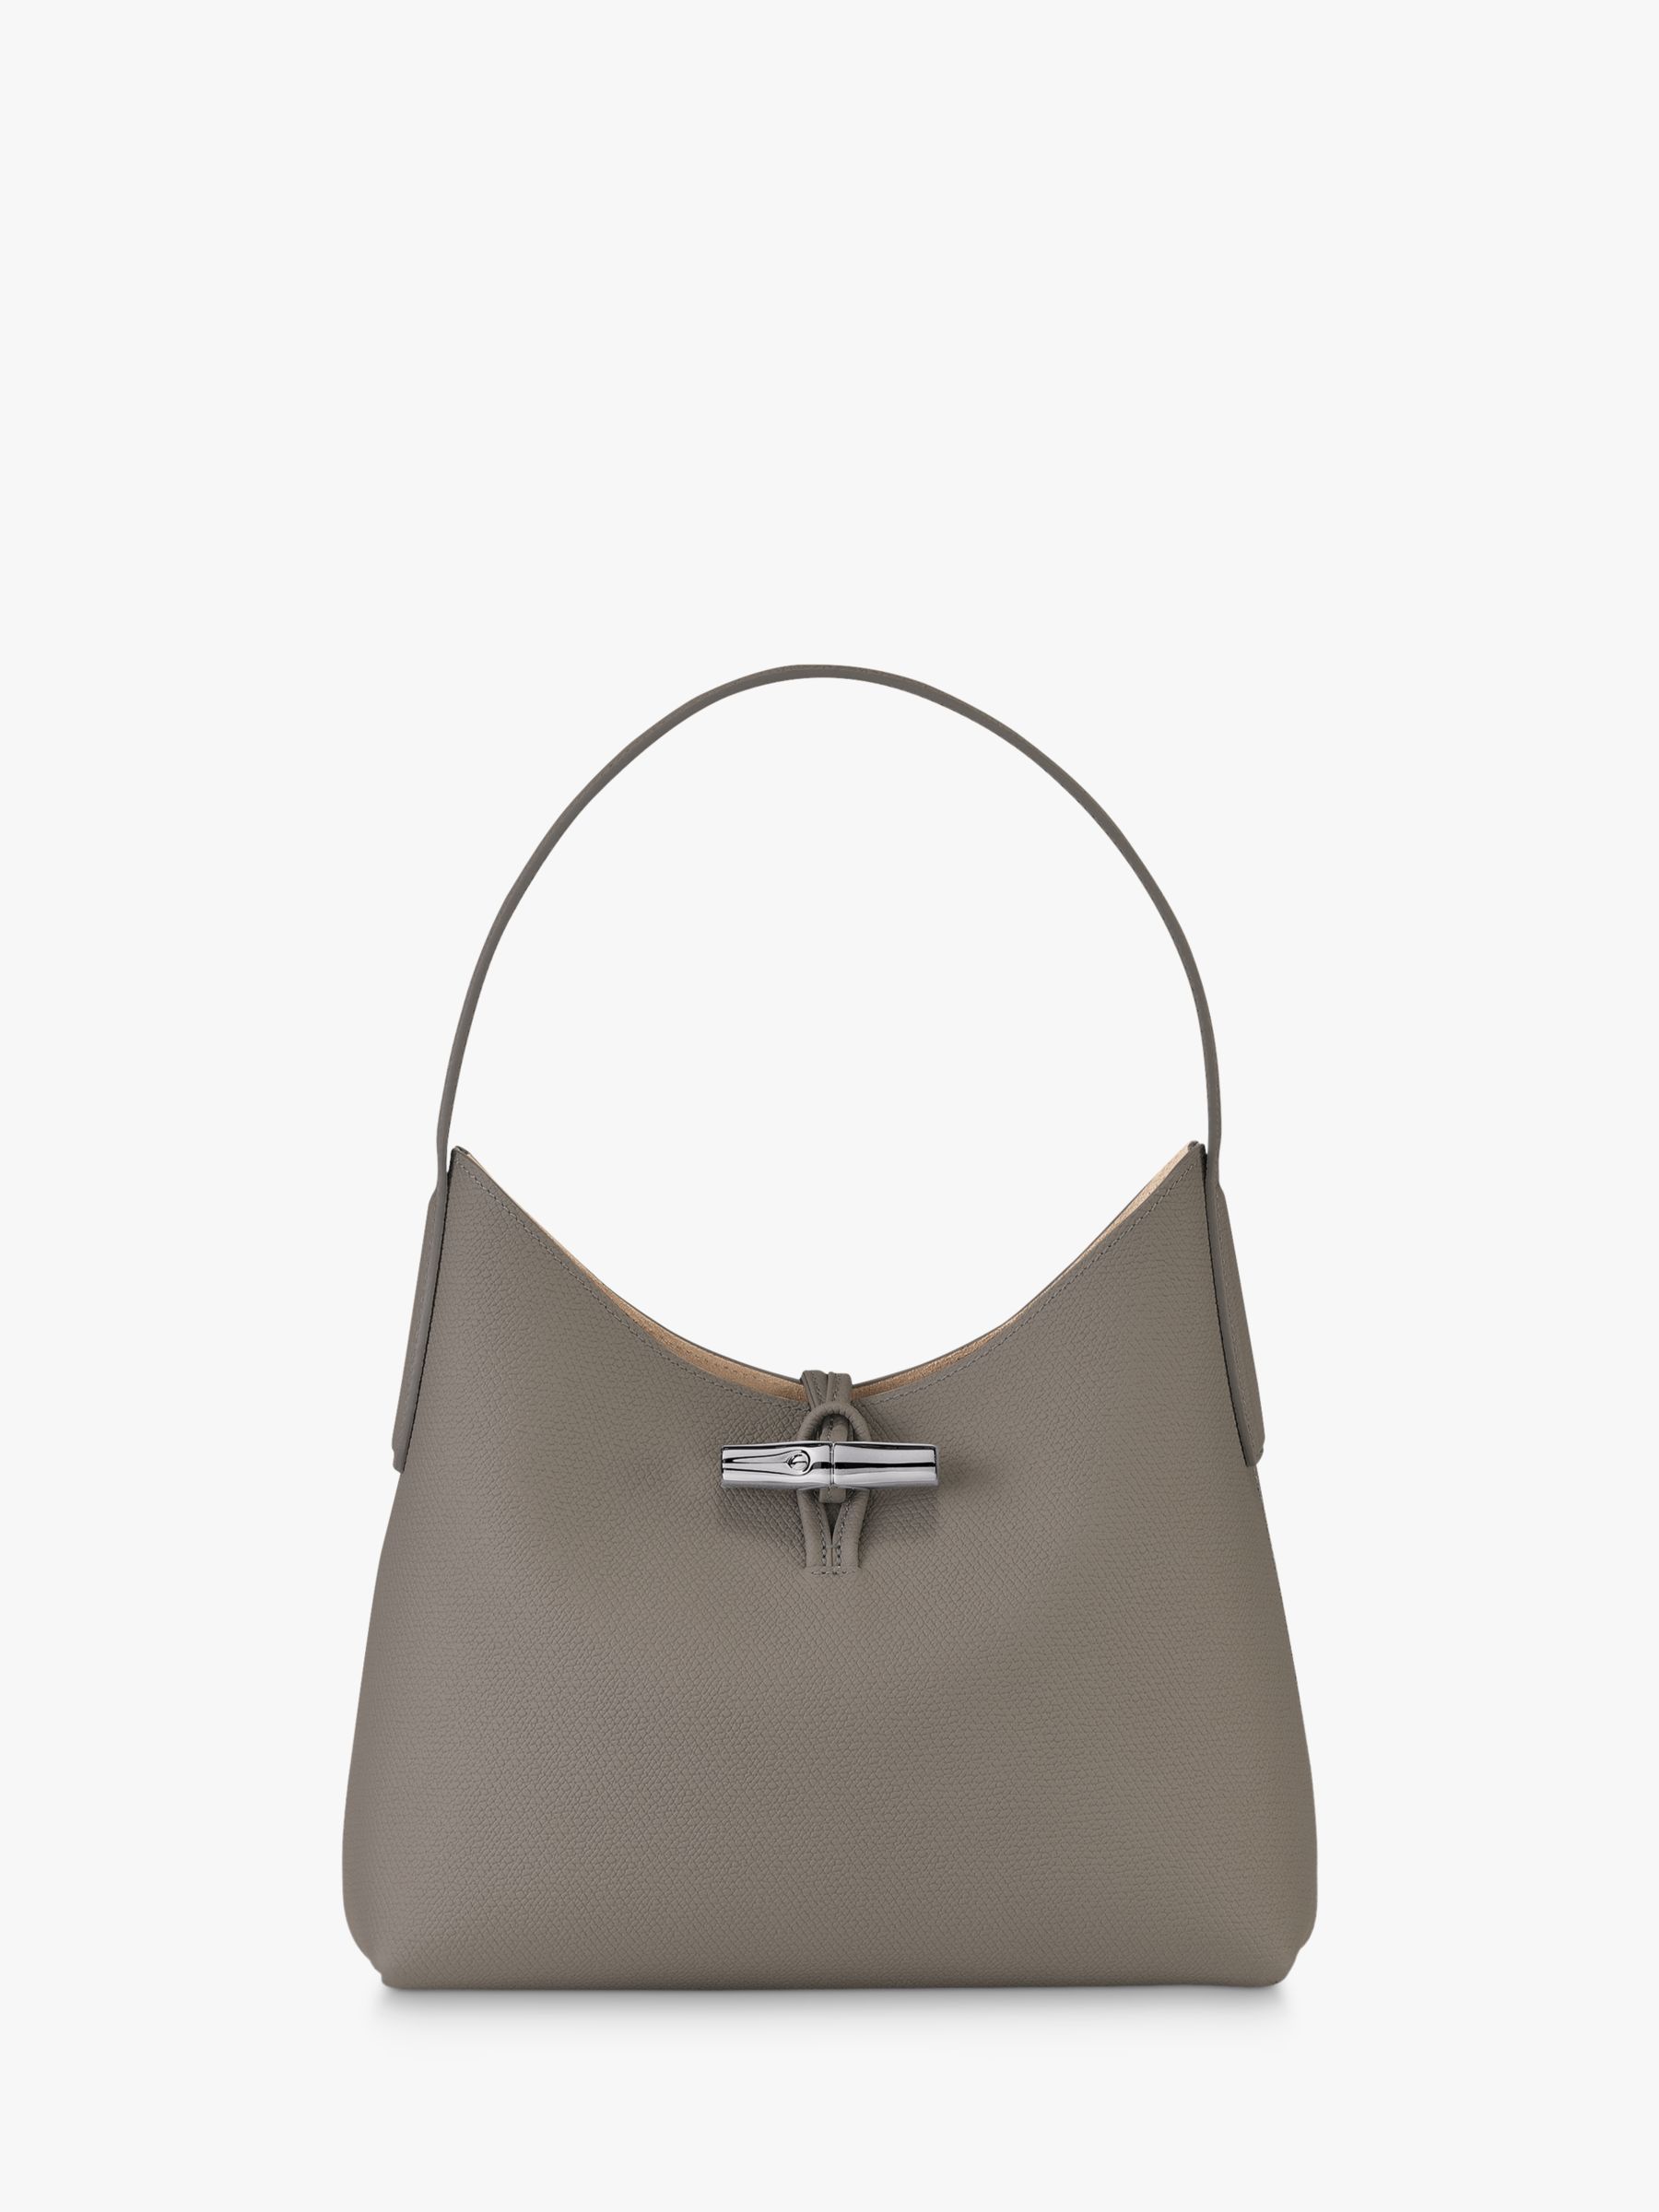 Brera Art Fever bag, Women's Fashion, Bags & Wallets, Cross-body